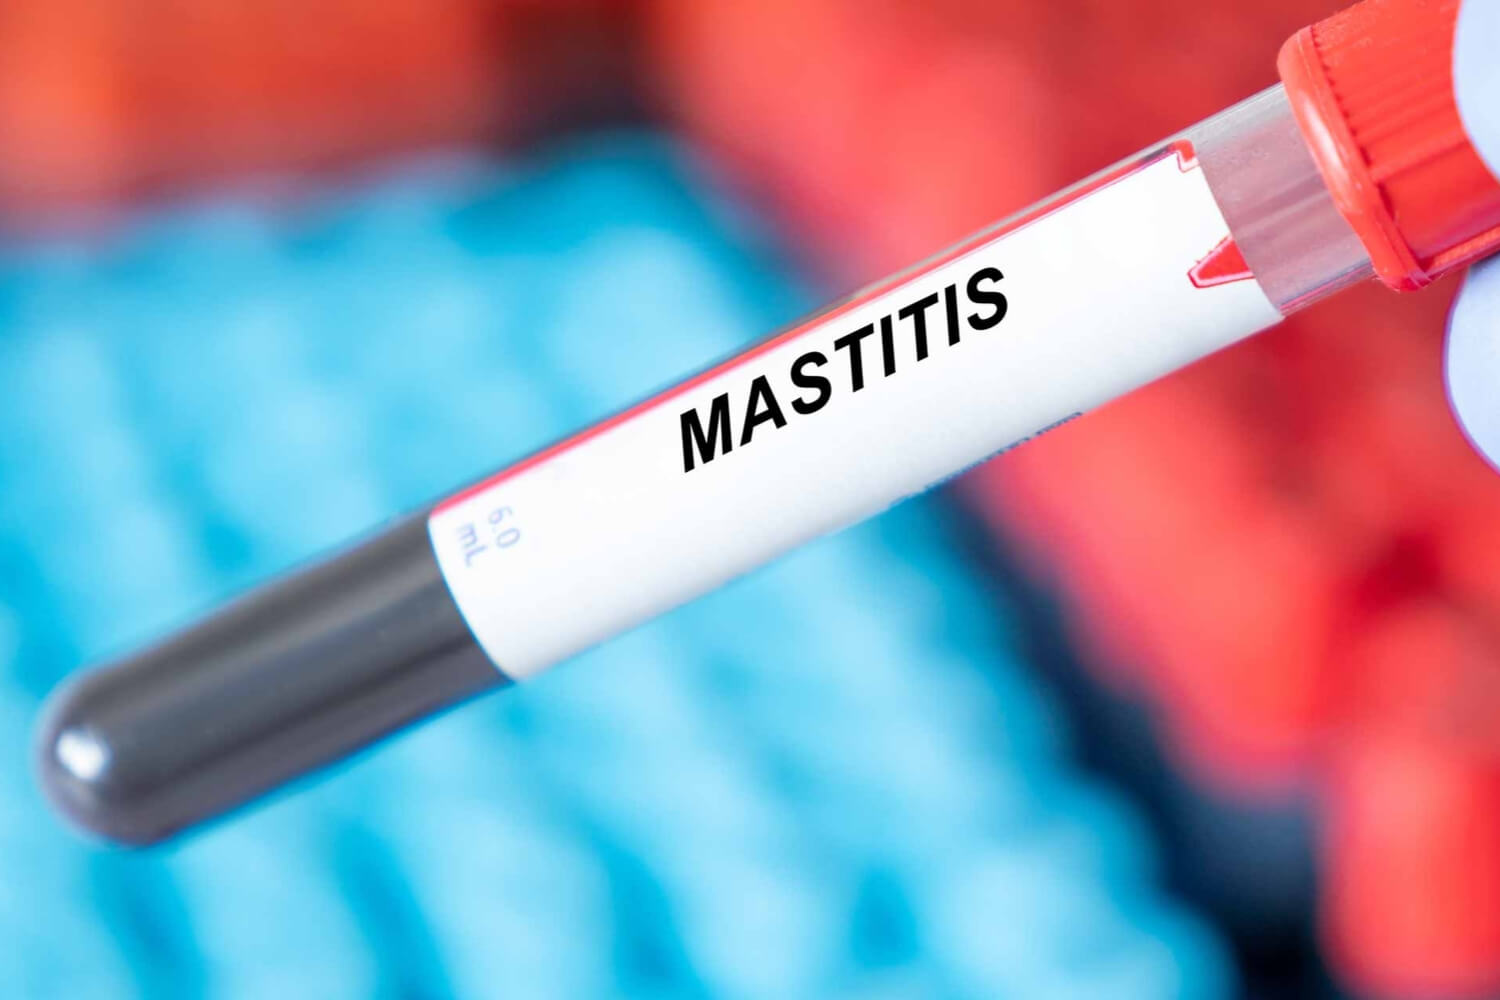 Mastitis treatment